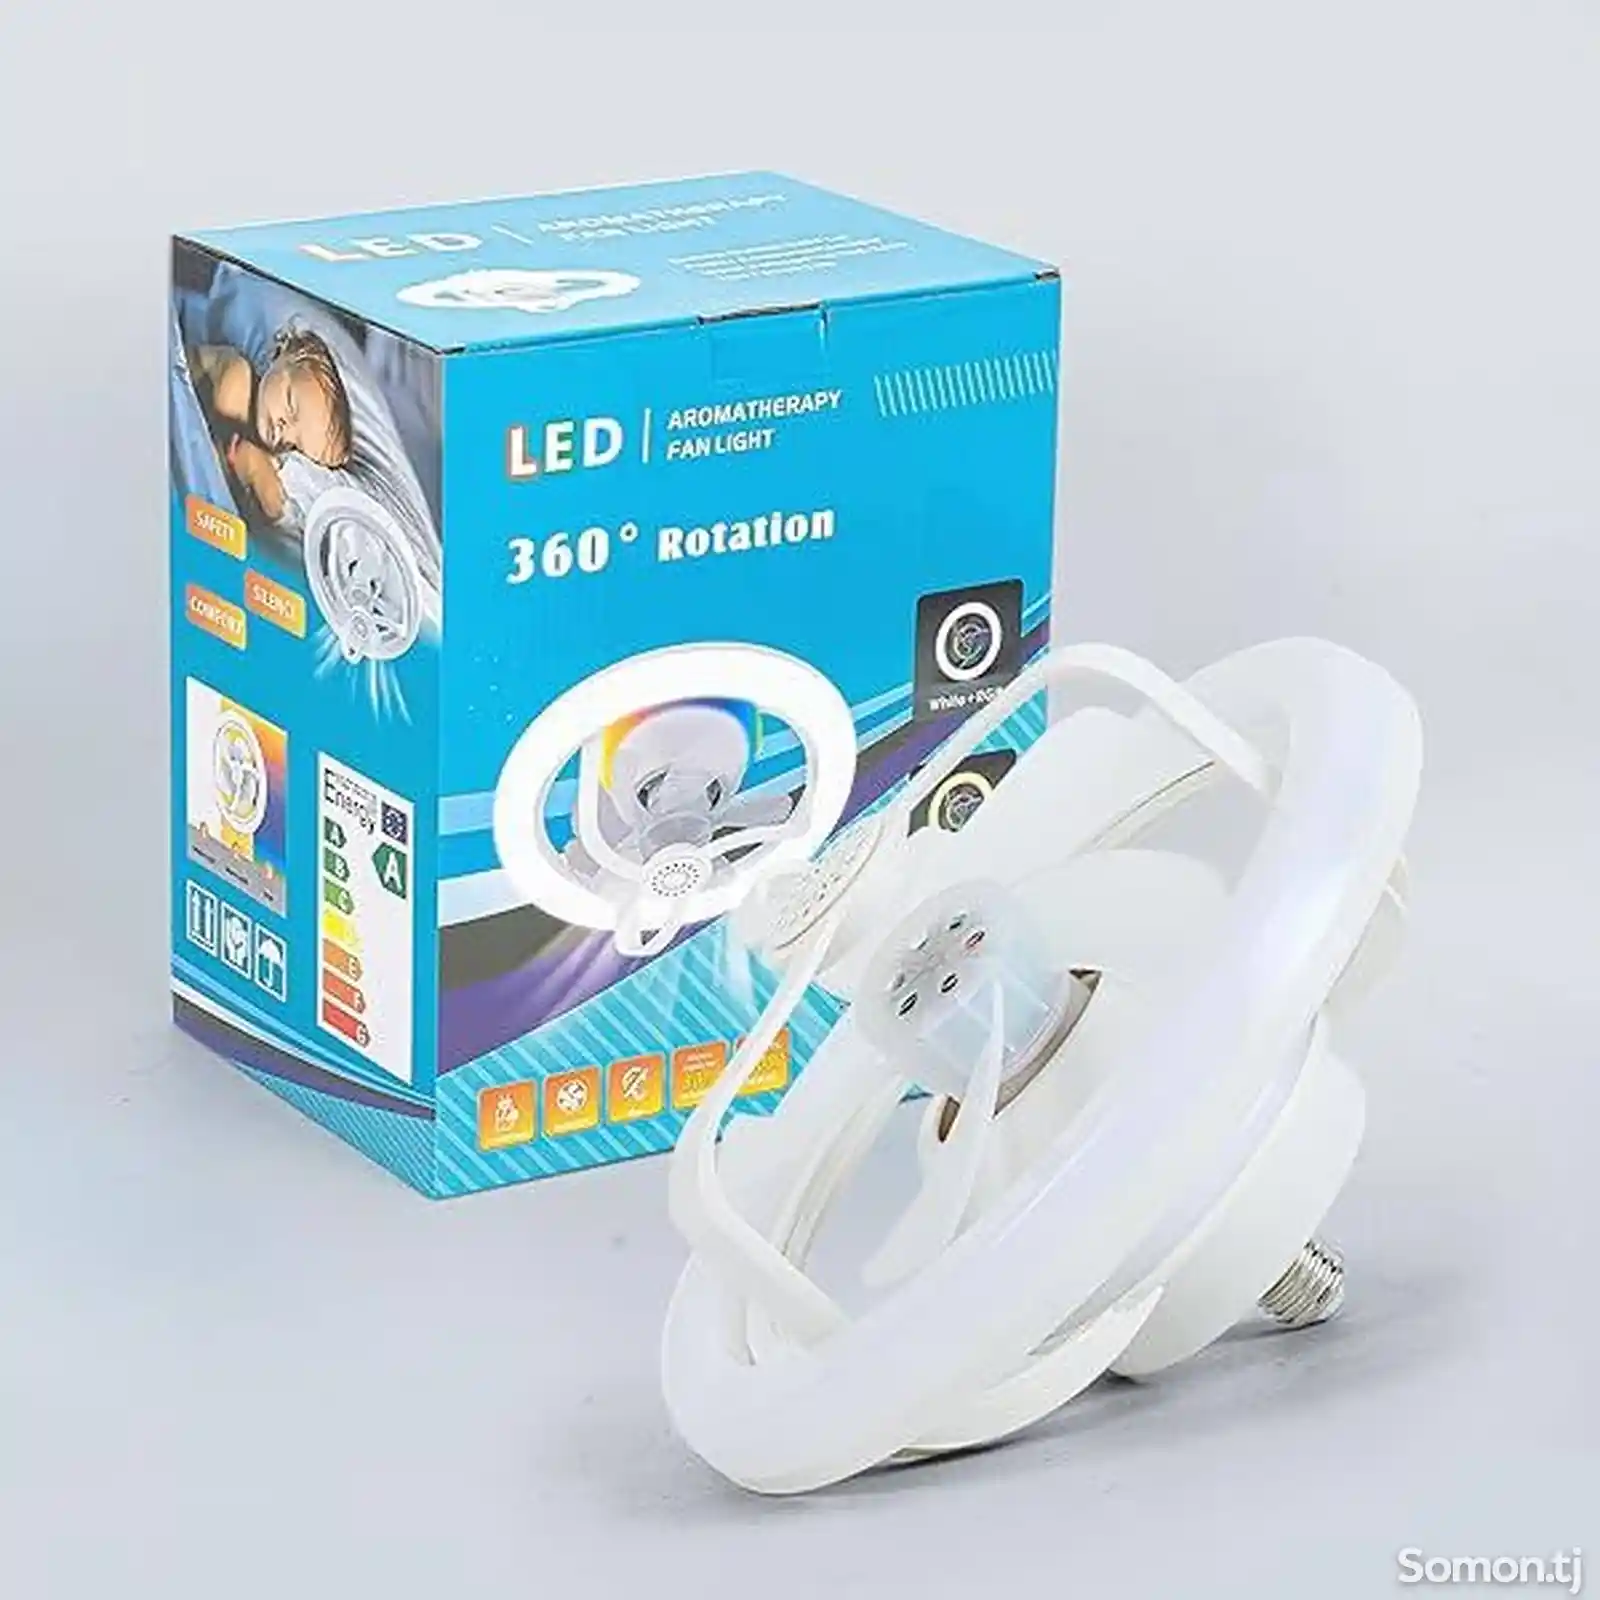 Лампочка потолочного вентилятора E27 стандартной яркости-4